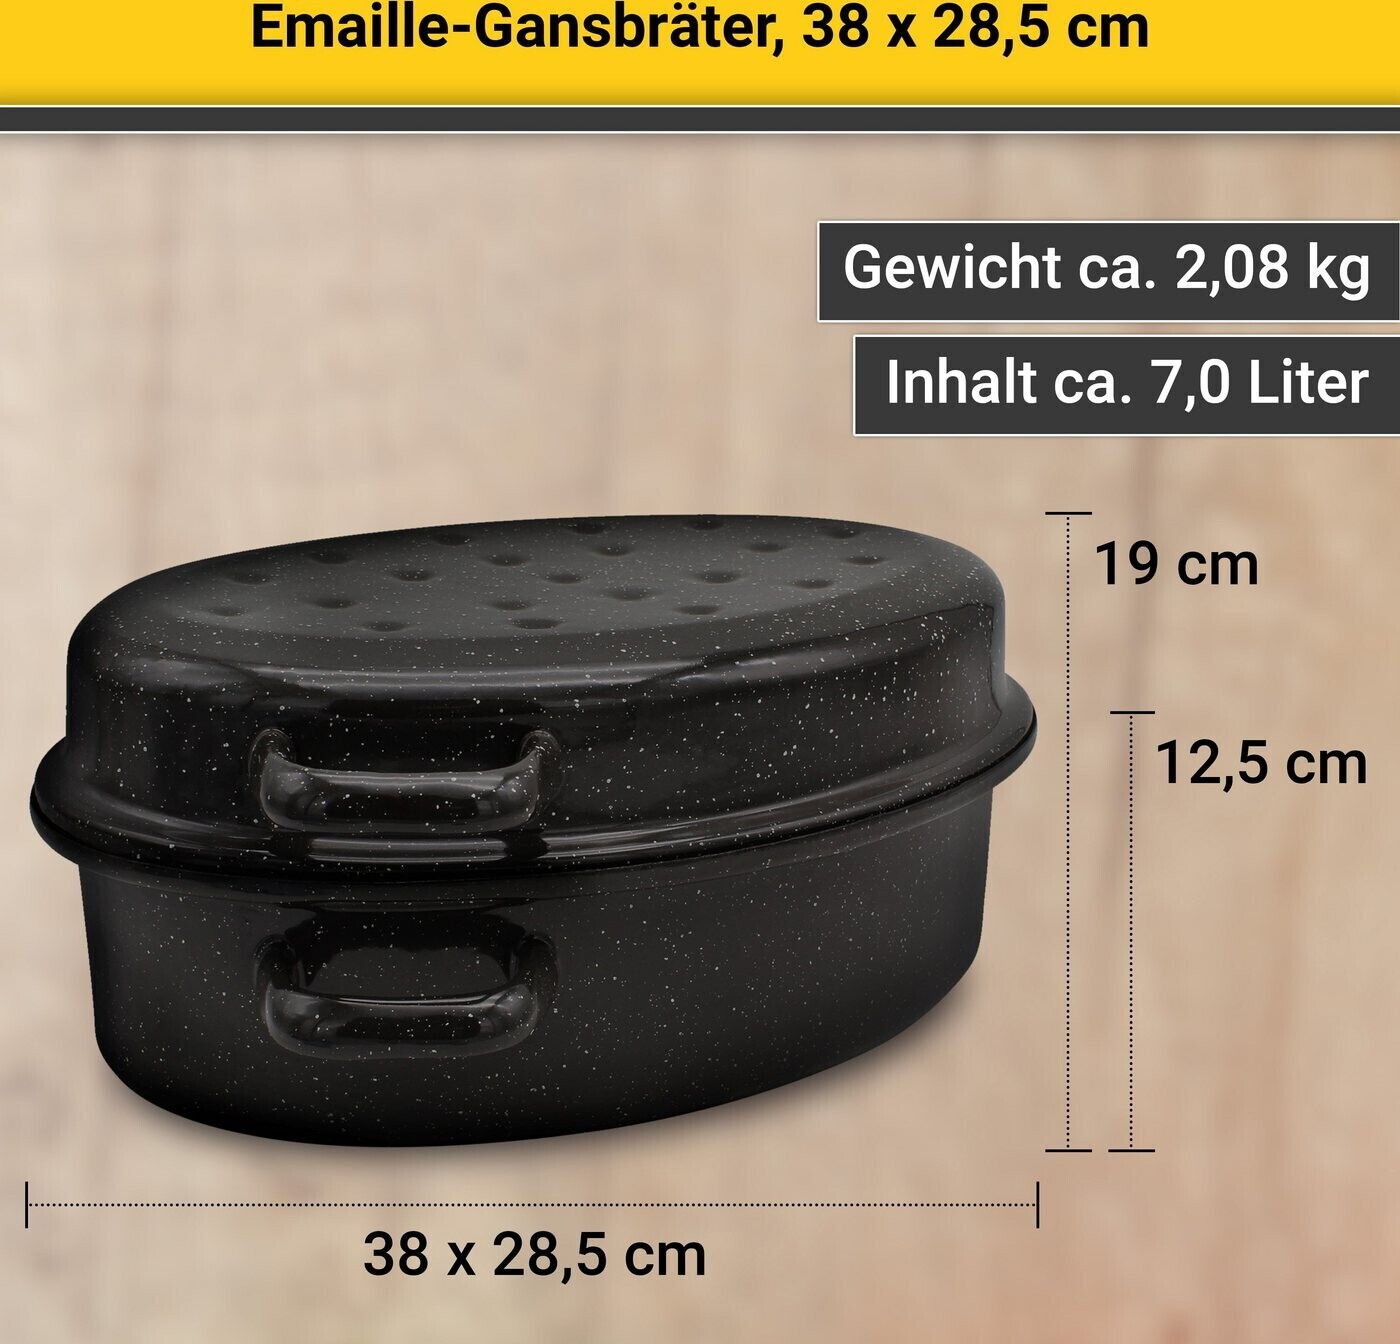 100% Qualität Krüger Gansbräter emailliert | 24,99 bei € Preisvergleich ab cm 38